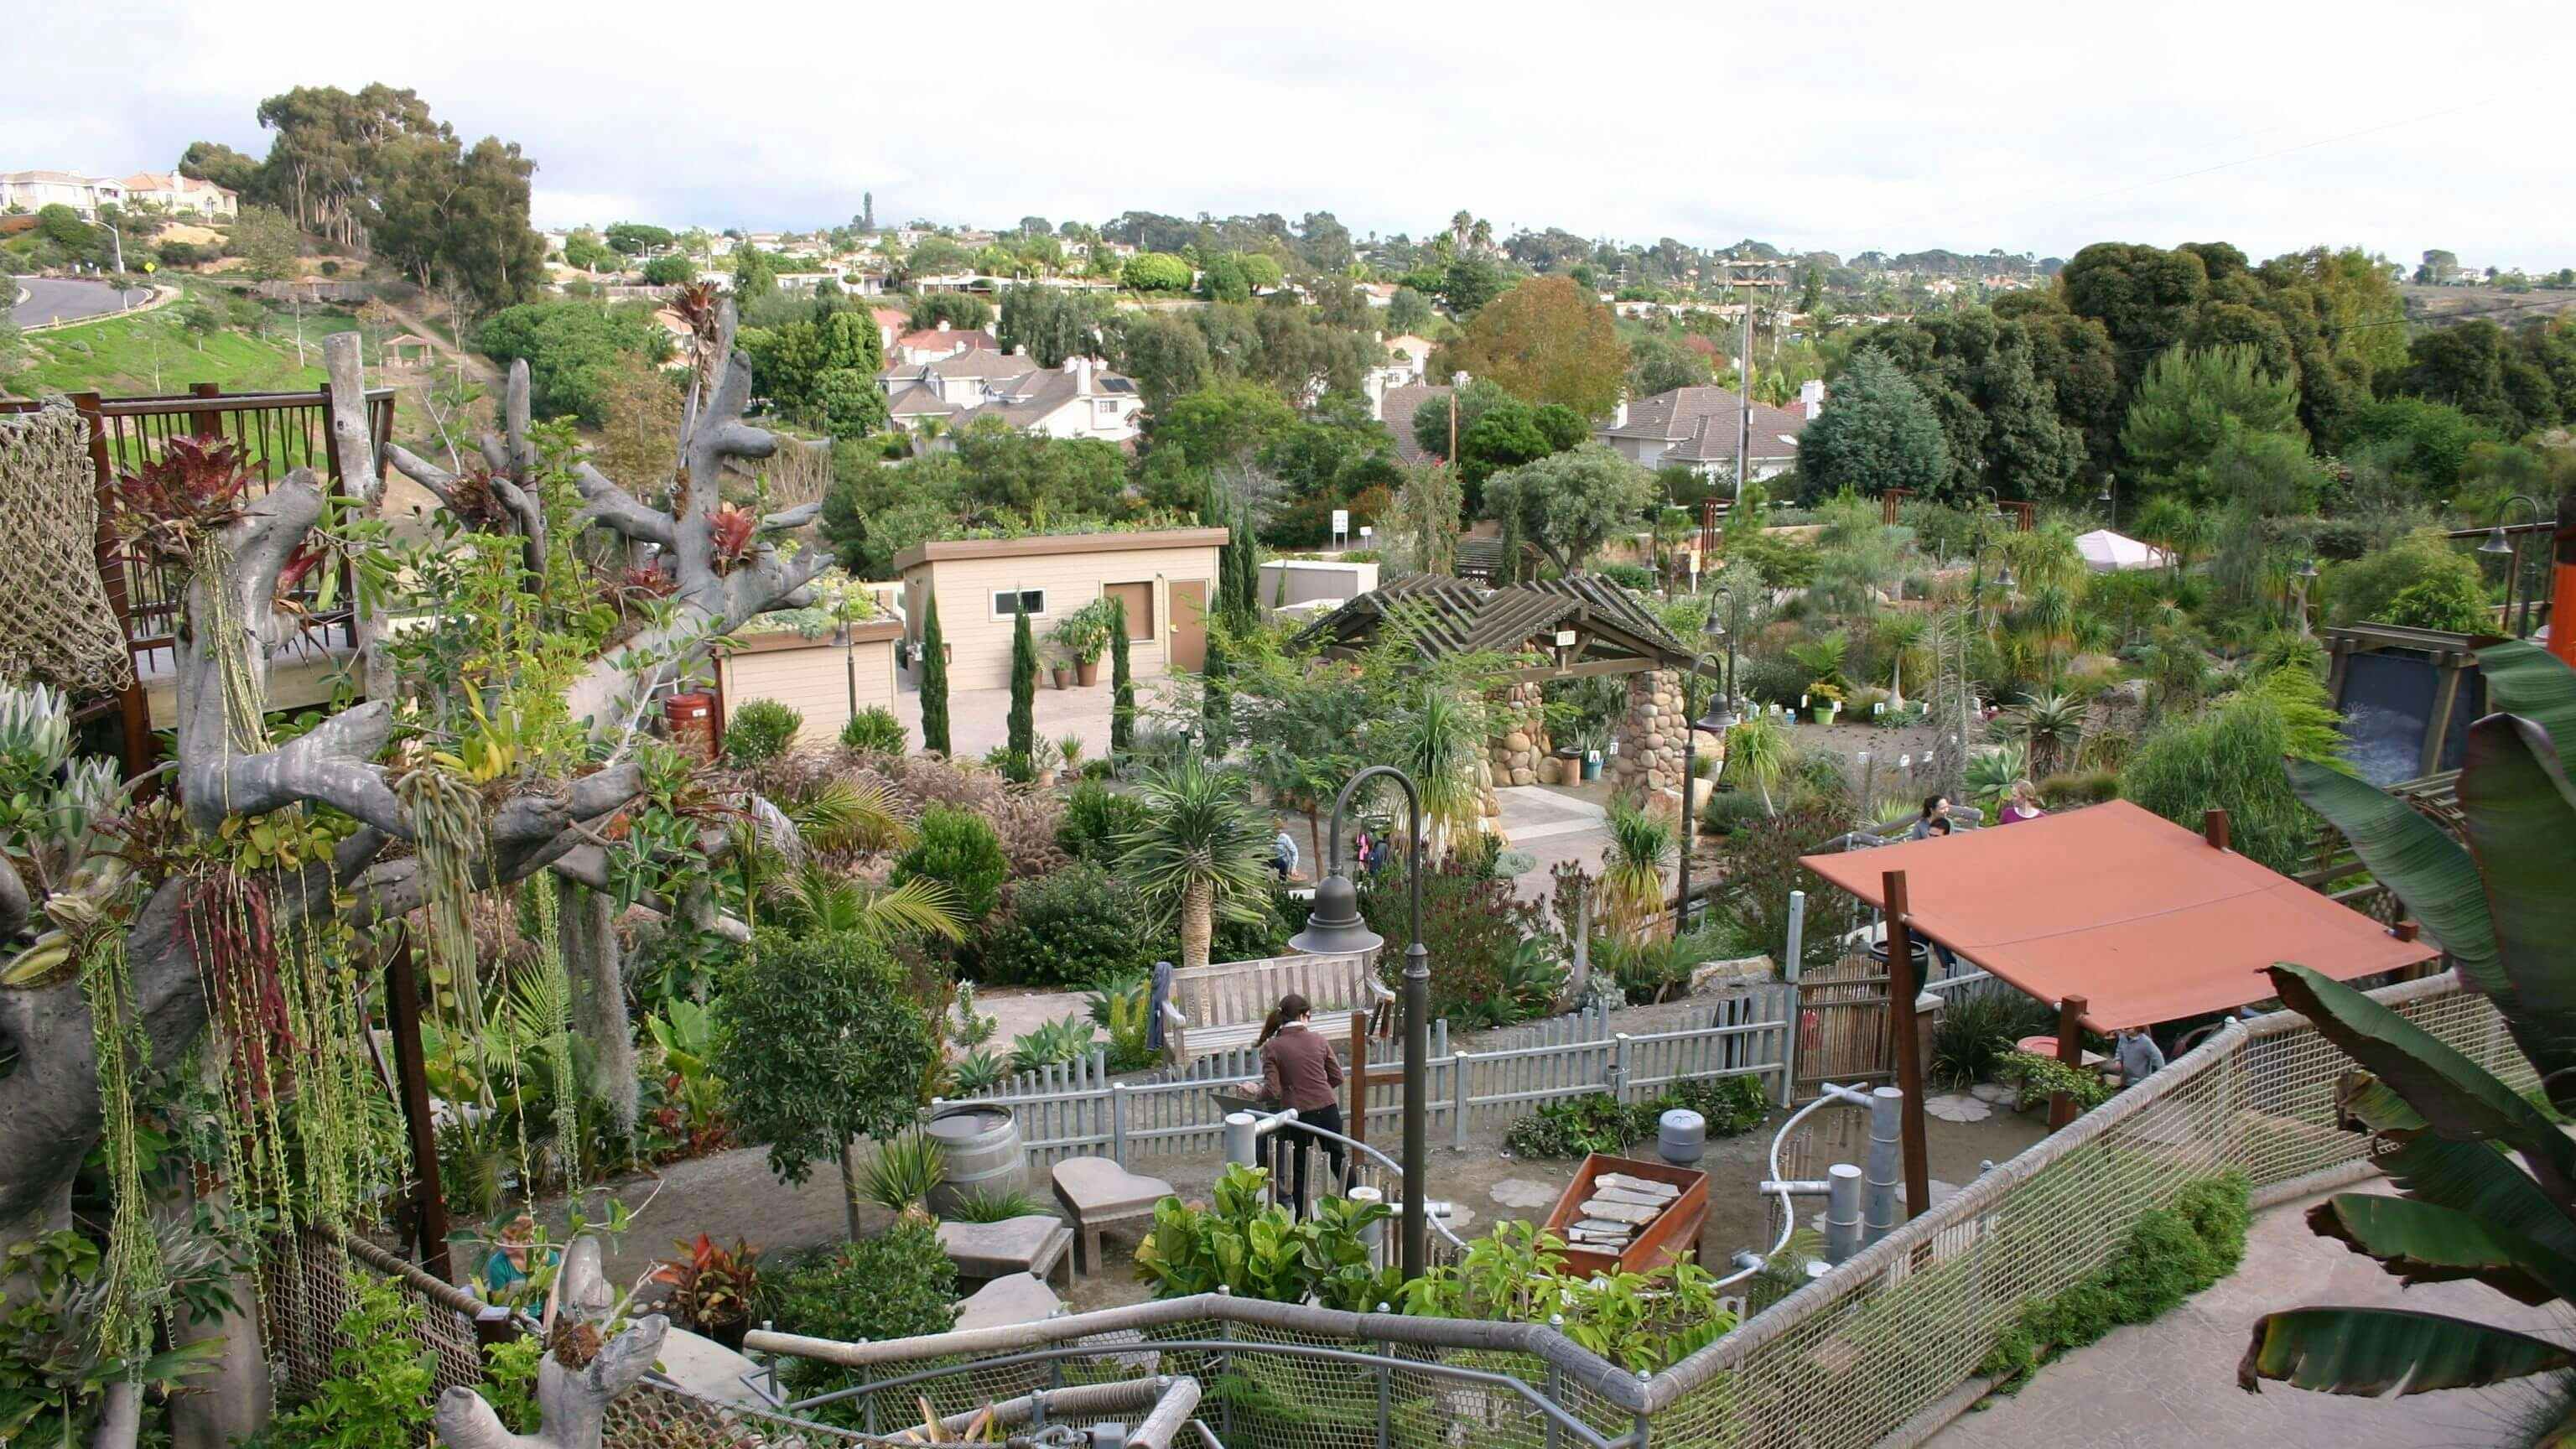 Free Things to Do in San Diego: San Diego Botanical Gardens